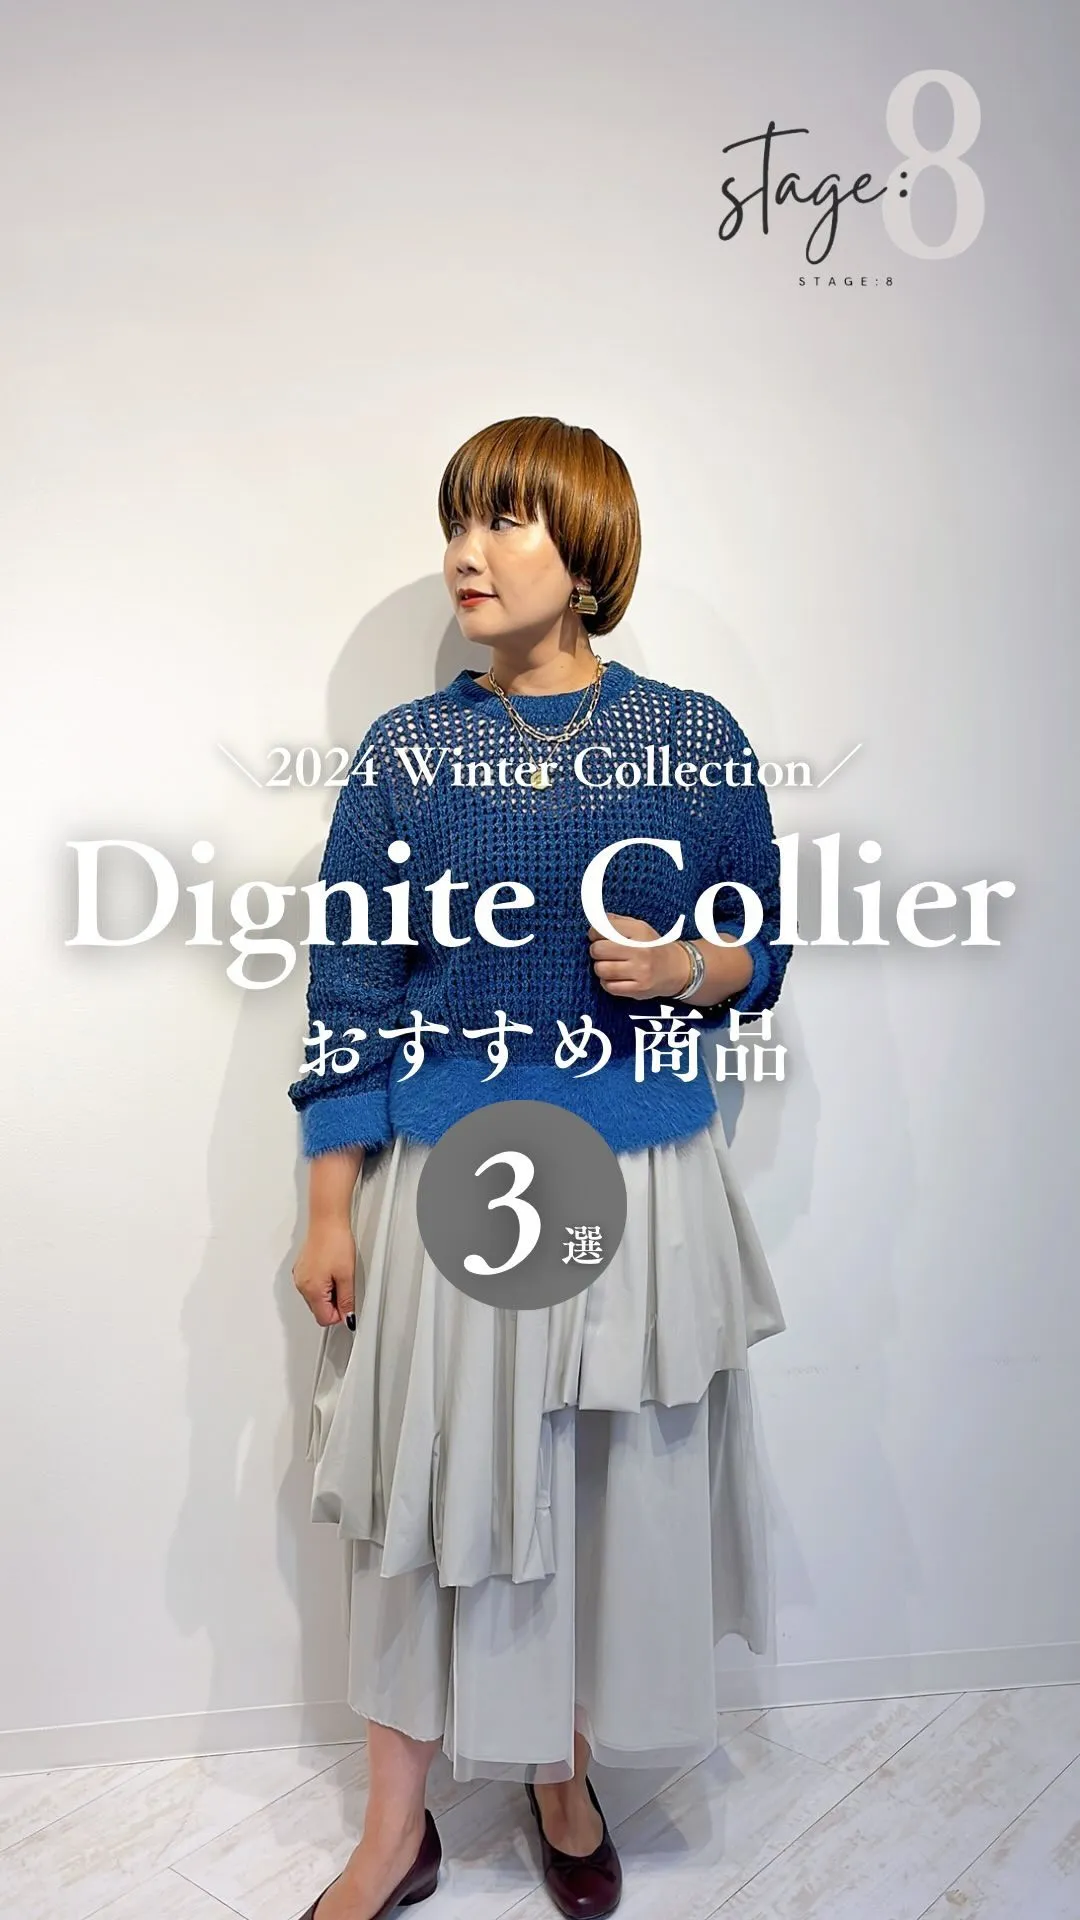 Dignite Collier冬コレクション おすすめ商品3...